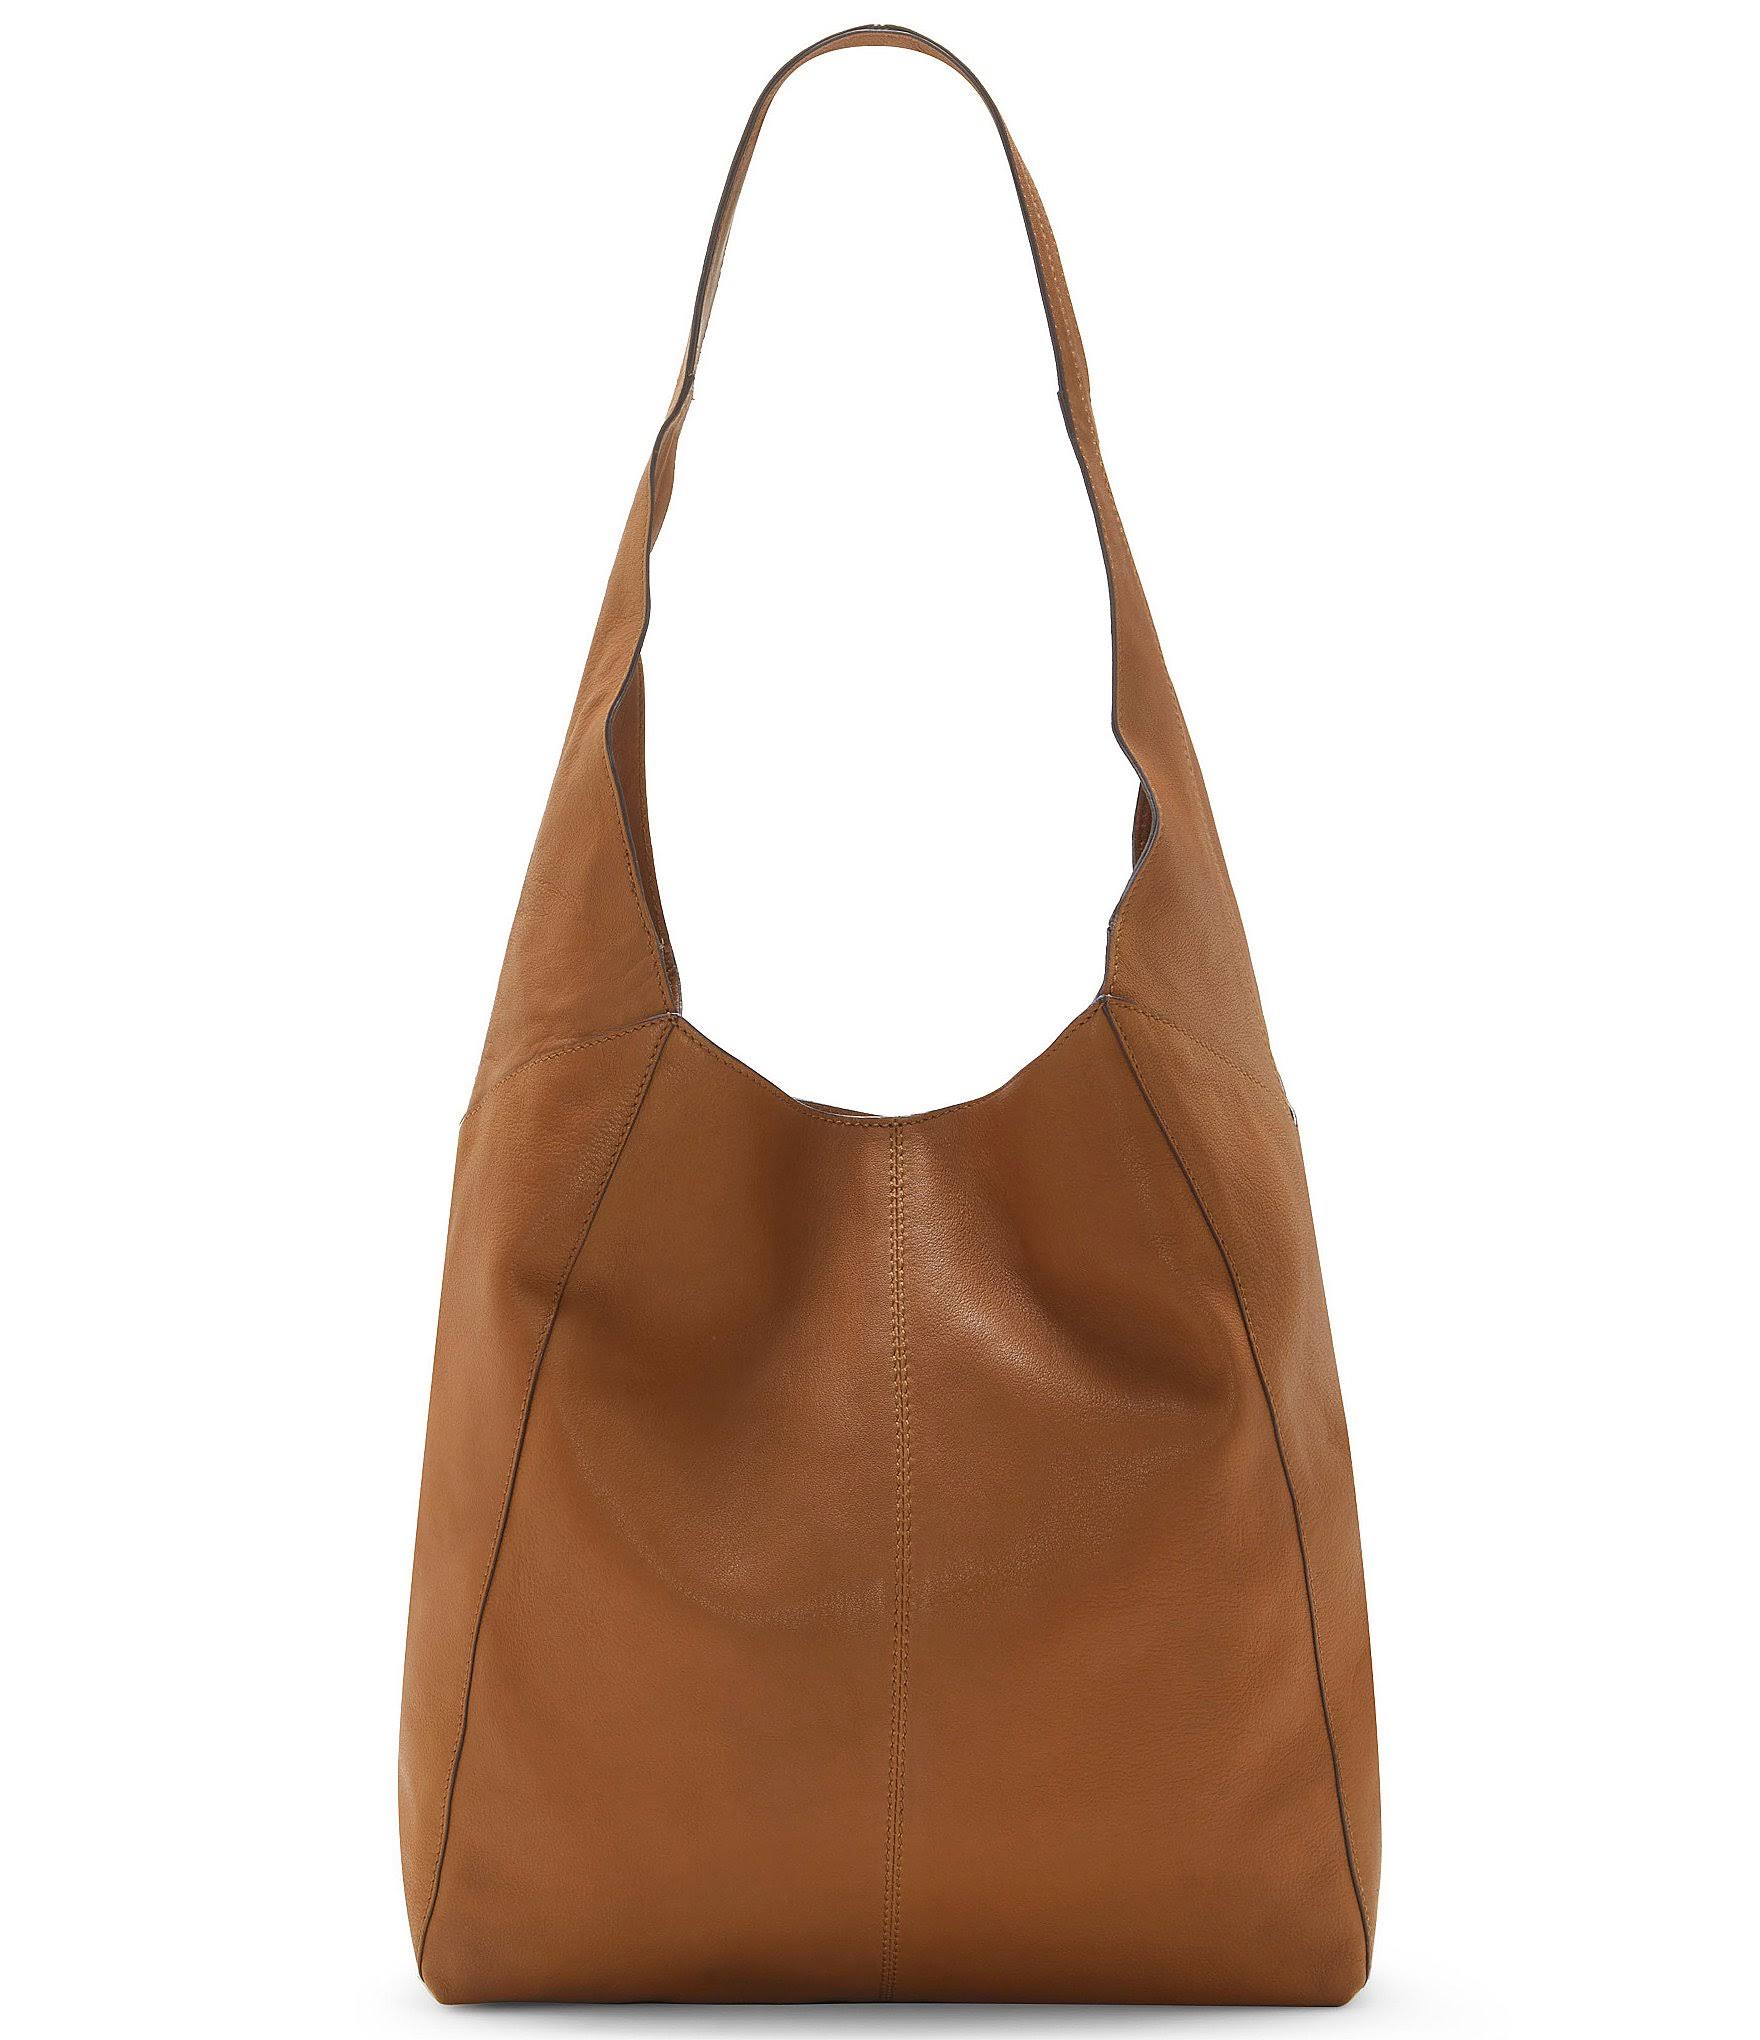 Lucky Brand Patti Leather Slouchy Hobo Bag - Brandy - My Leather Swear